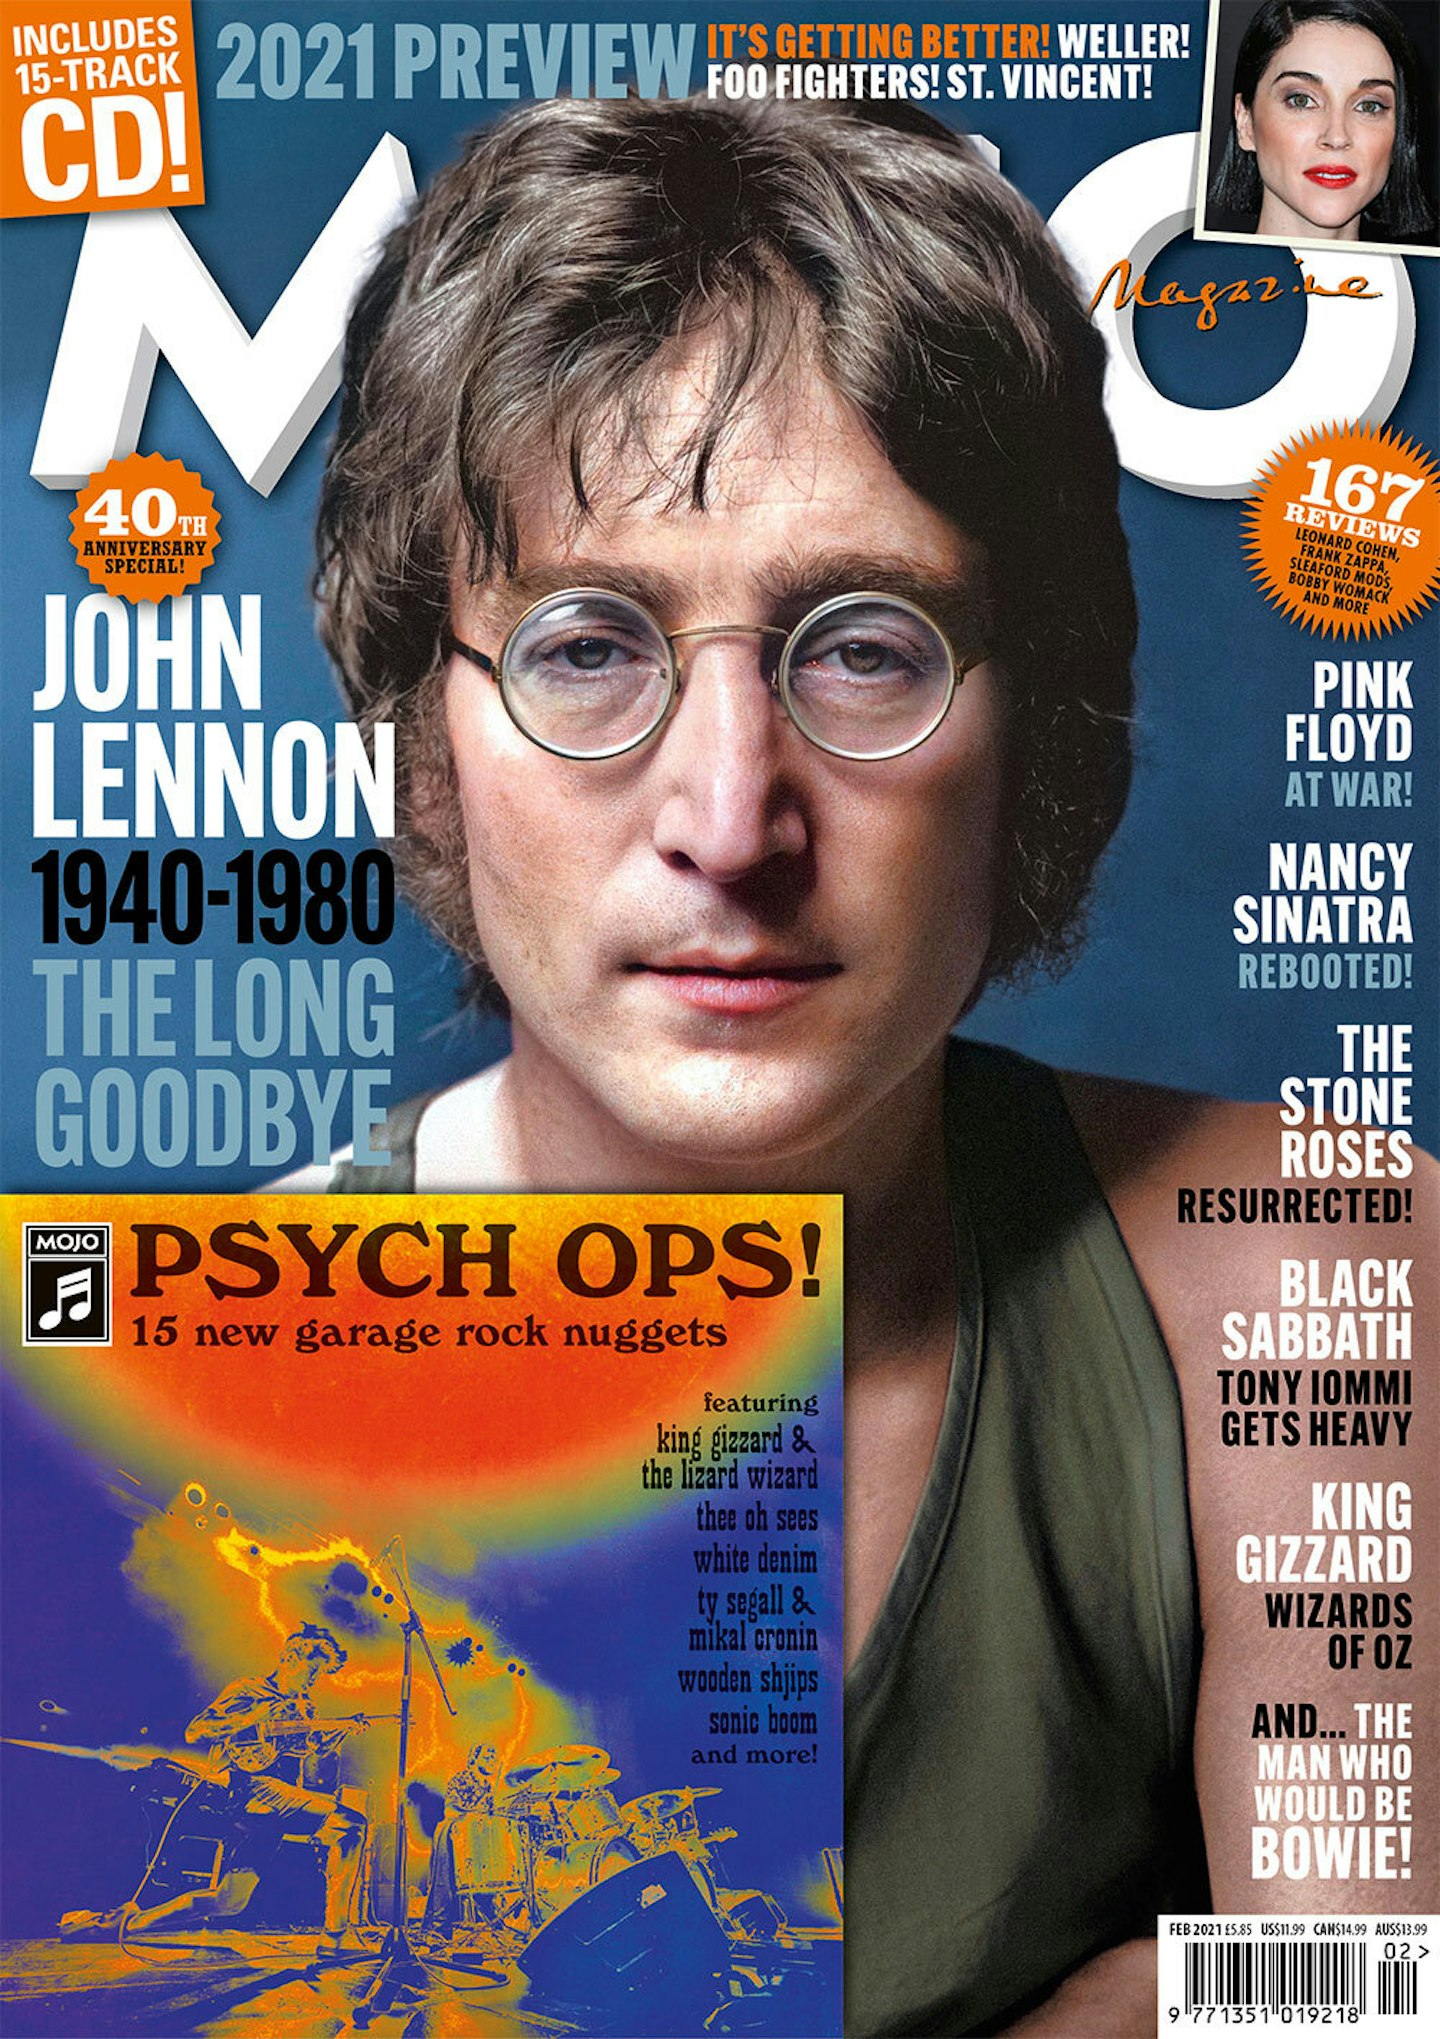 MOJO 327 – February 2021: John Lennon